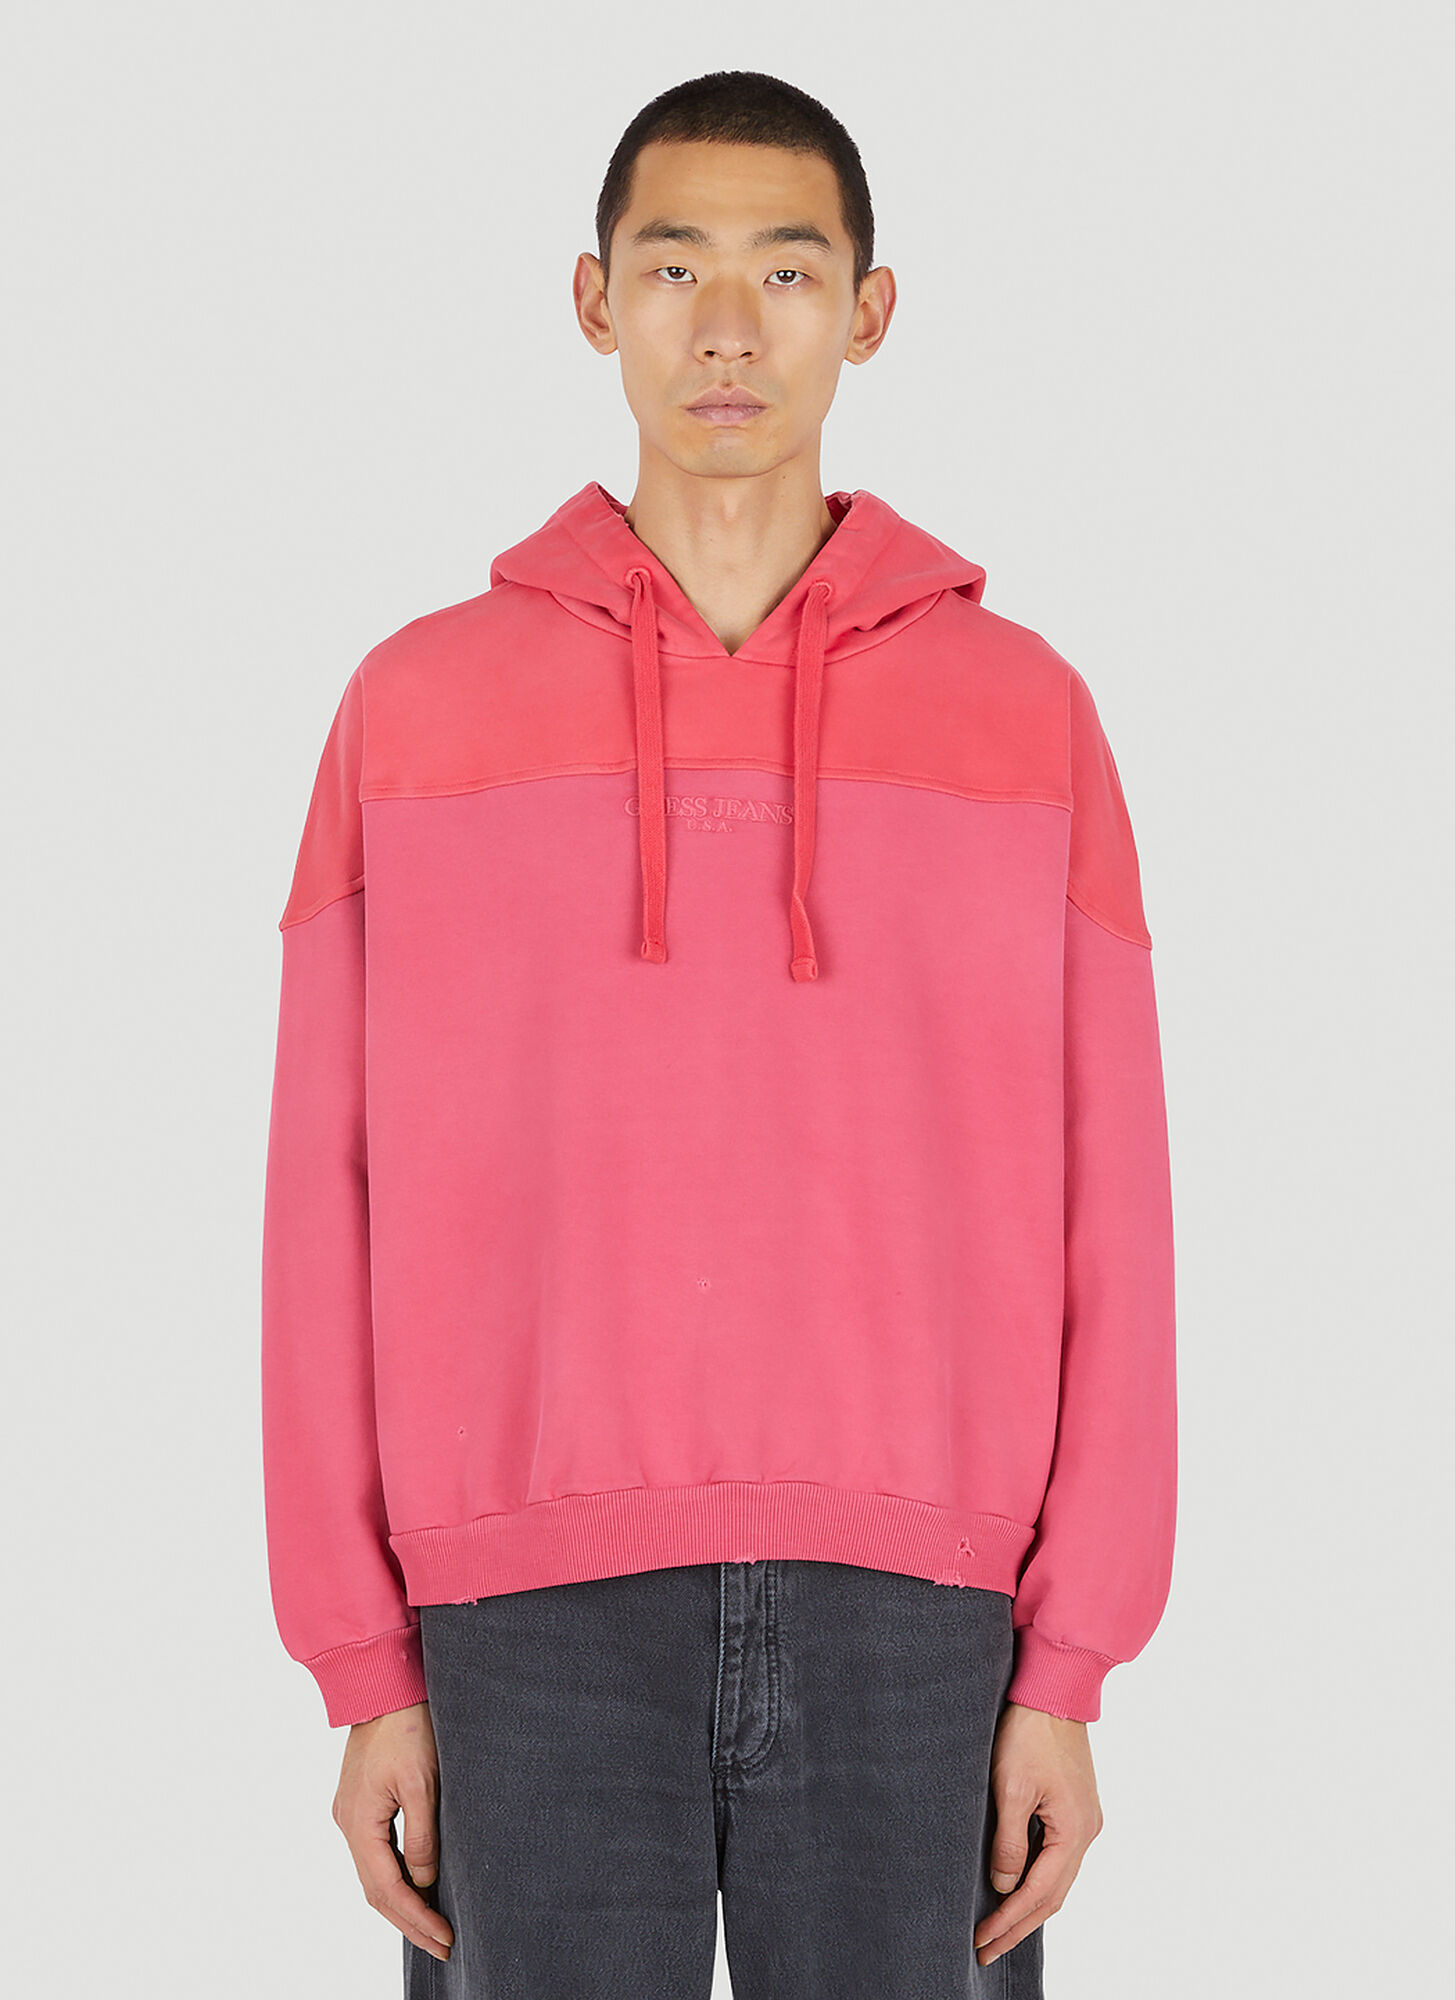 Guess Usa Two Tone Hooded Sweatshirt Male Pink